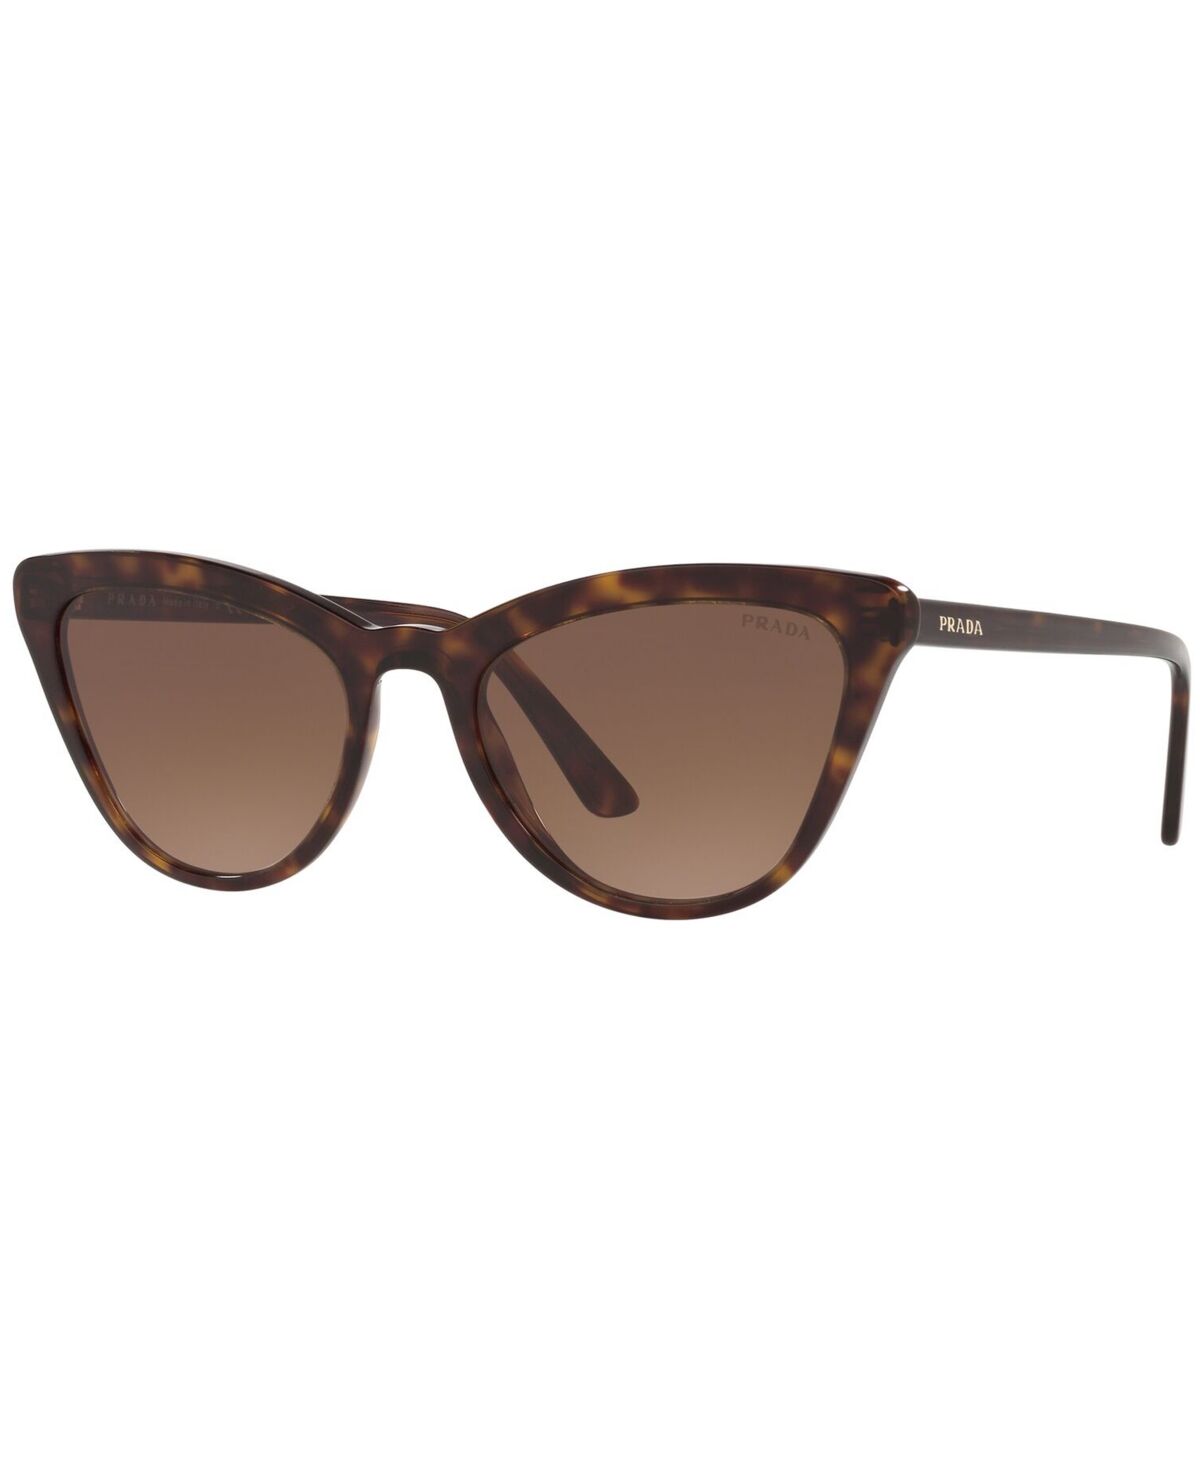 Prada Sunglasses, Pr 01VS Gradient - HAVANA/BROWN GRADIENT